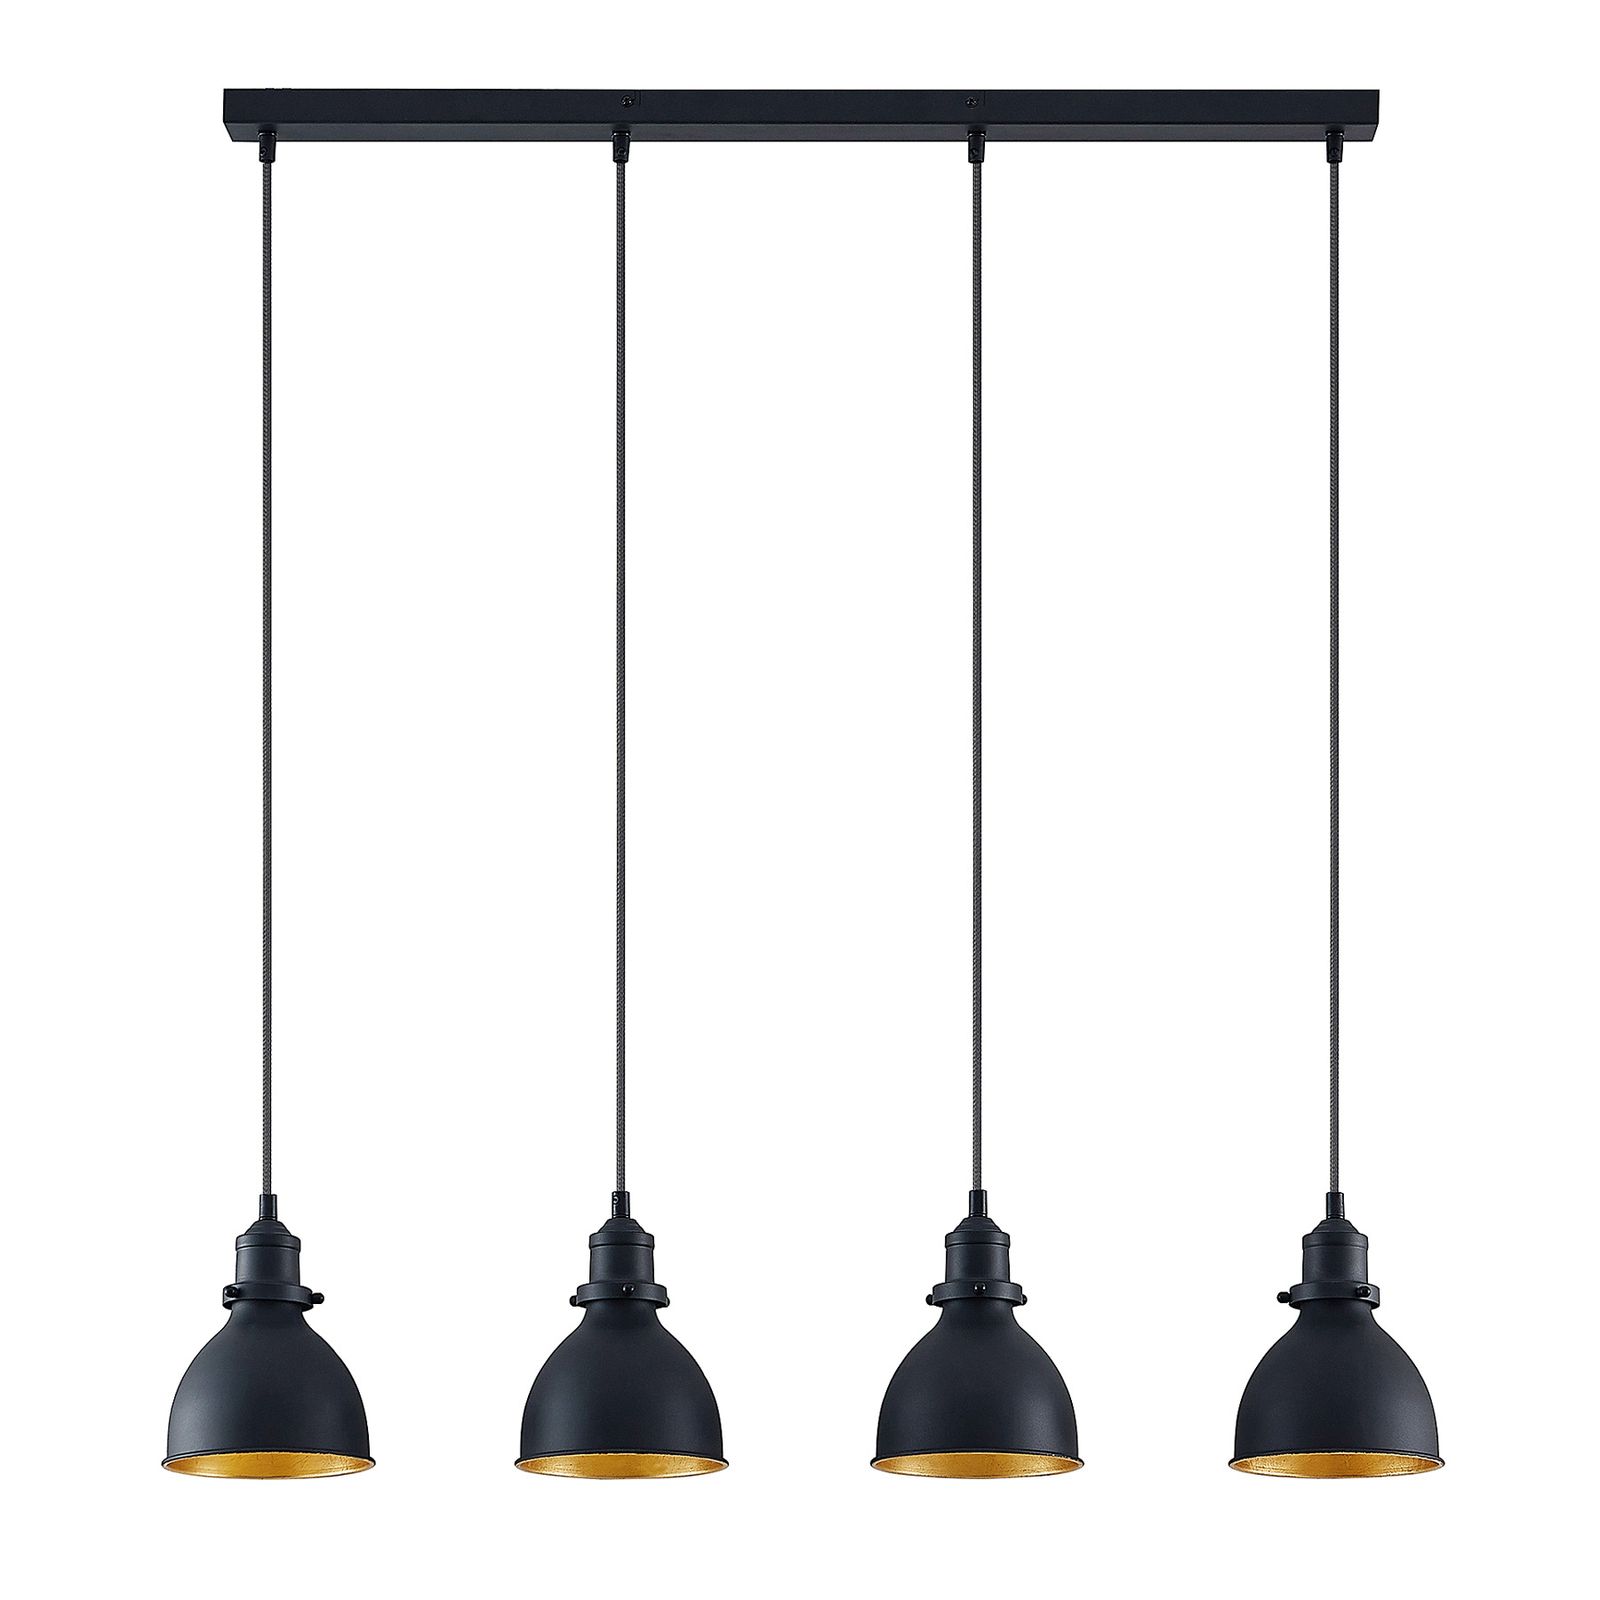 ELC Doskali hanglamp, zwart-goud, 4-lamps